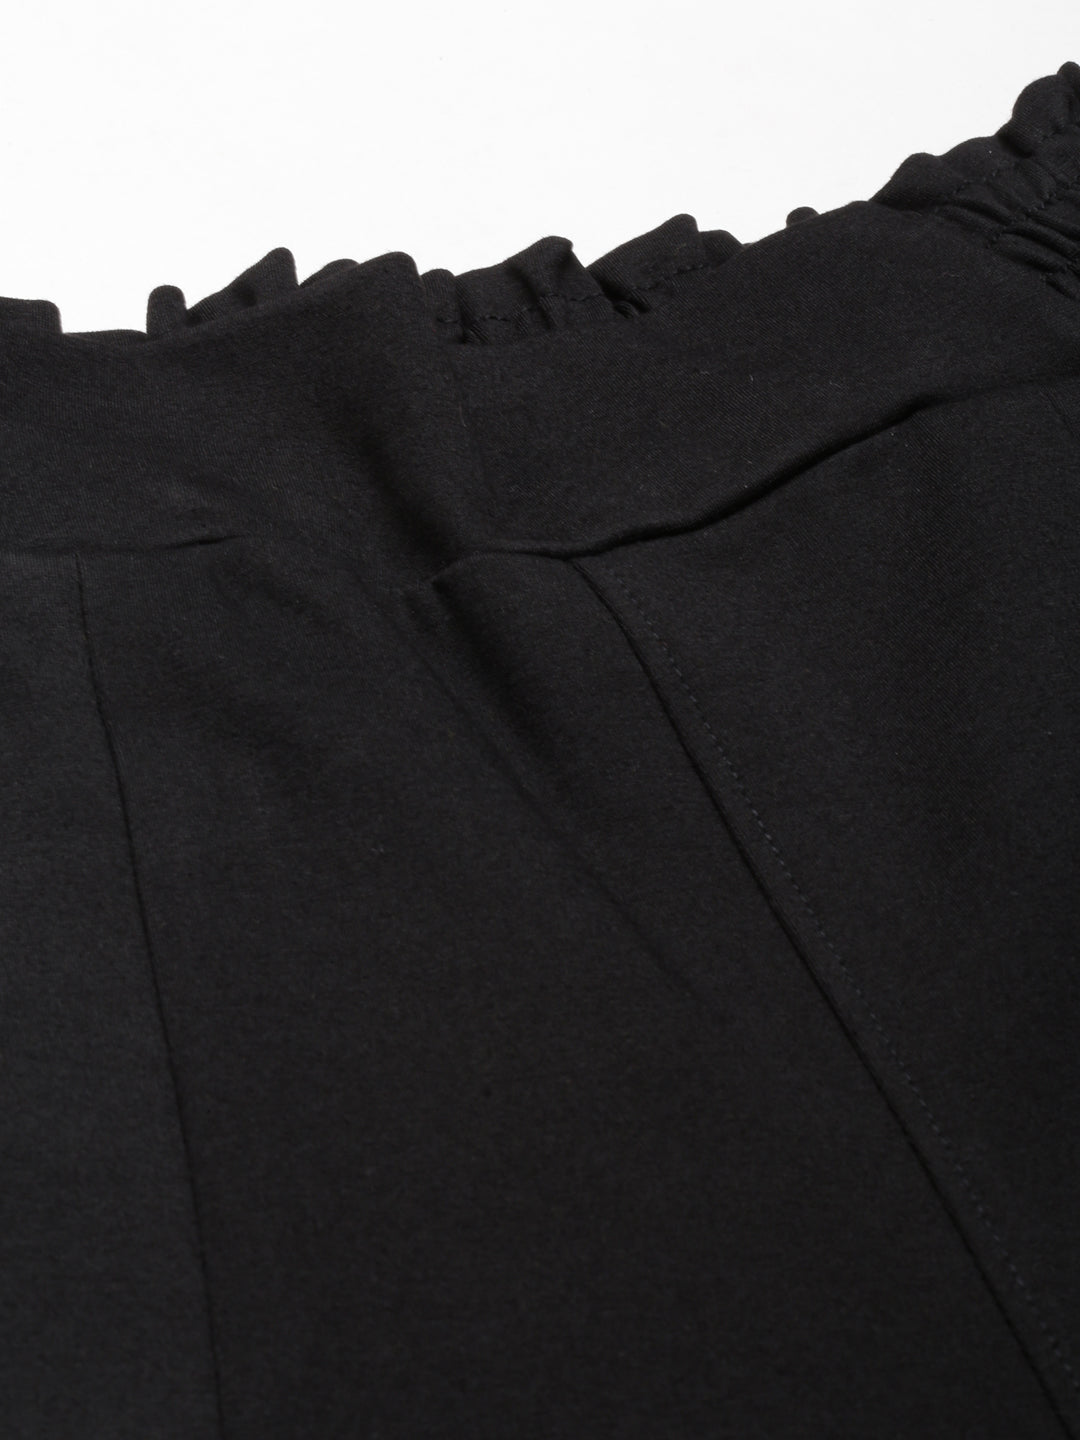 Women Black Solid Parallel Trouser